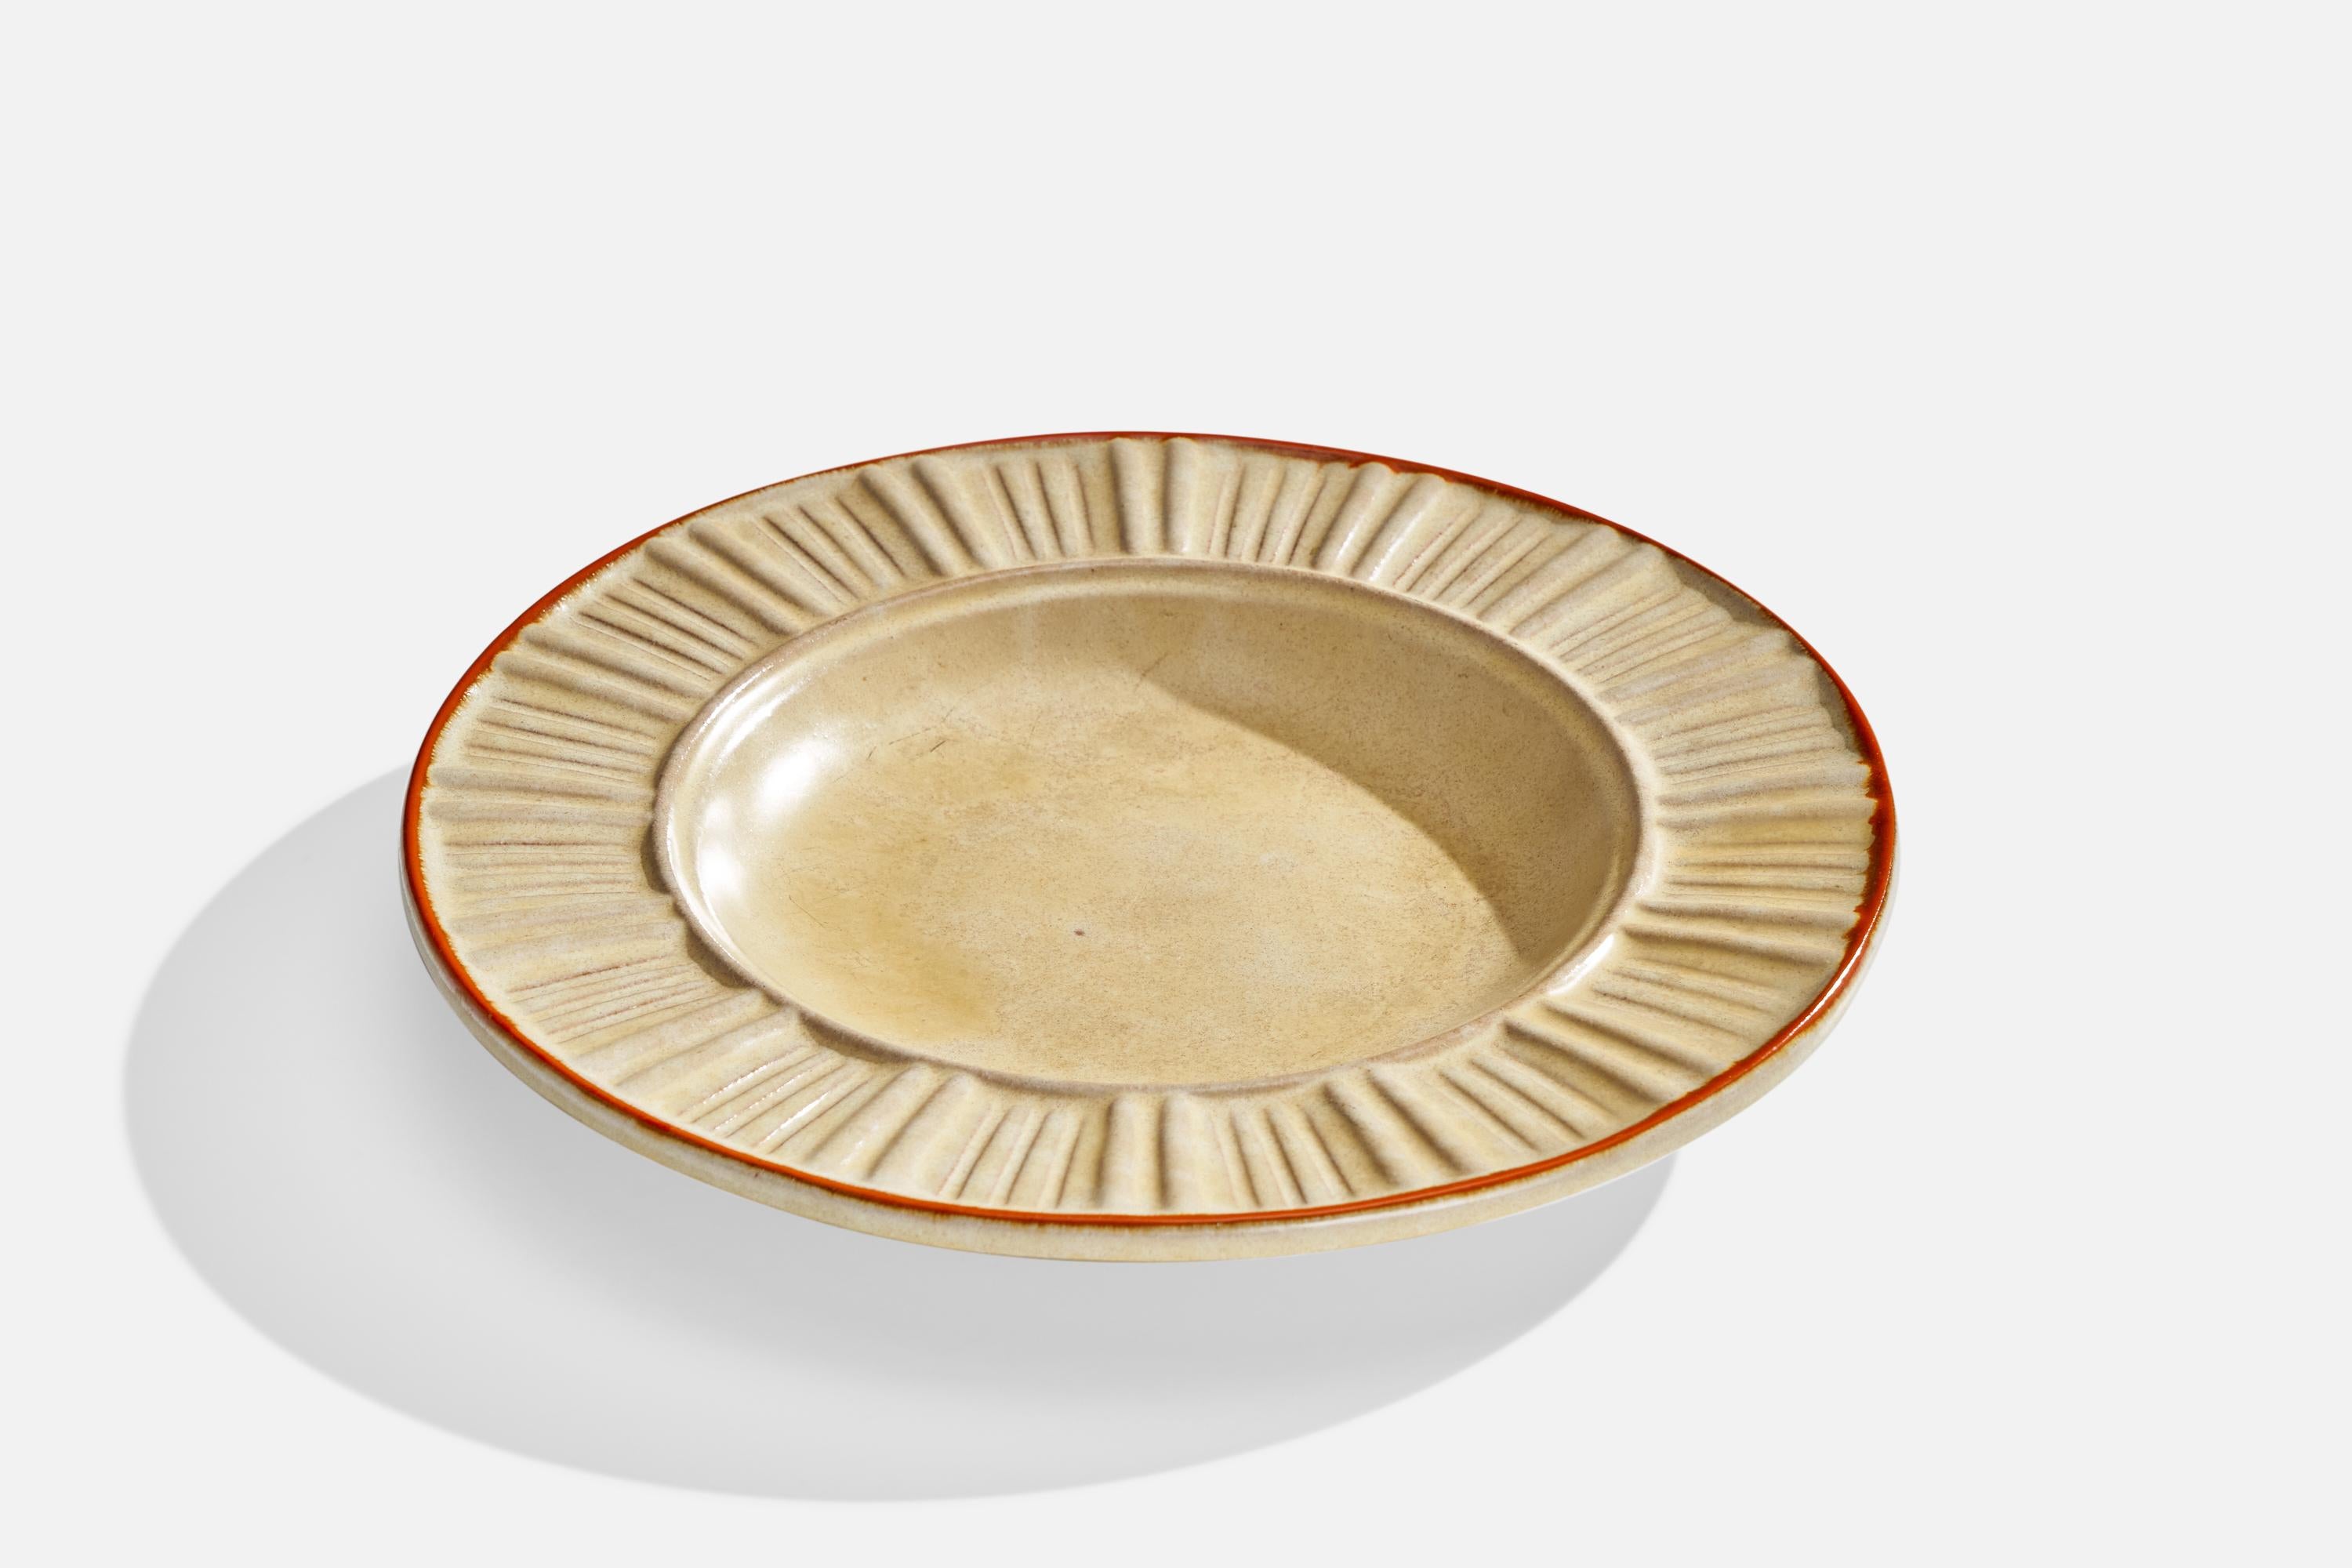 A beige and orange-glazed earthenware dish designed and produced by Upsala Ekeby, Sweden, 1930s.